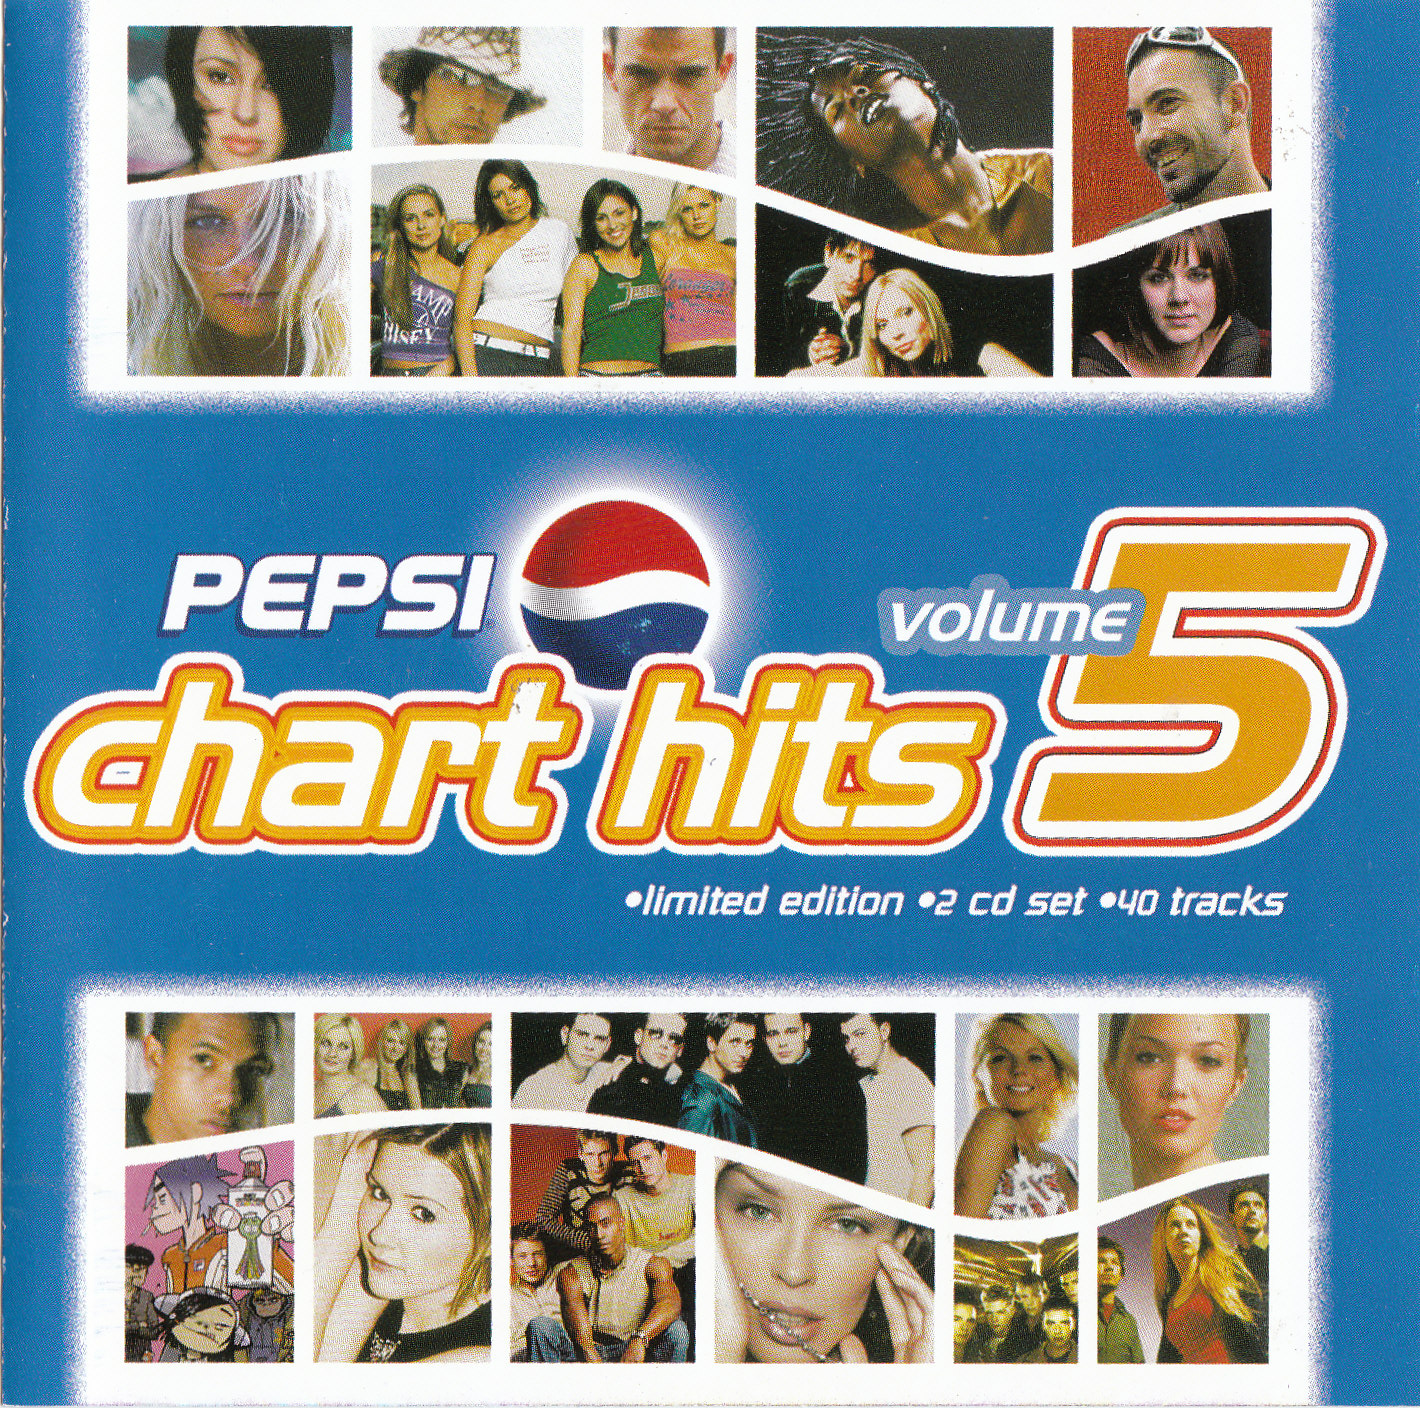 Pepsi chart hits best of 2001 torrent ana torrent actress